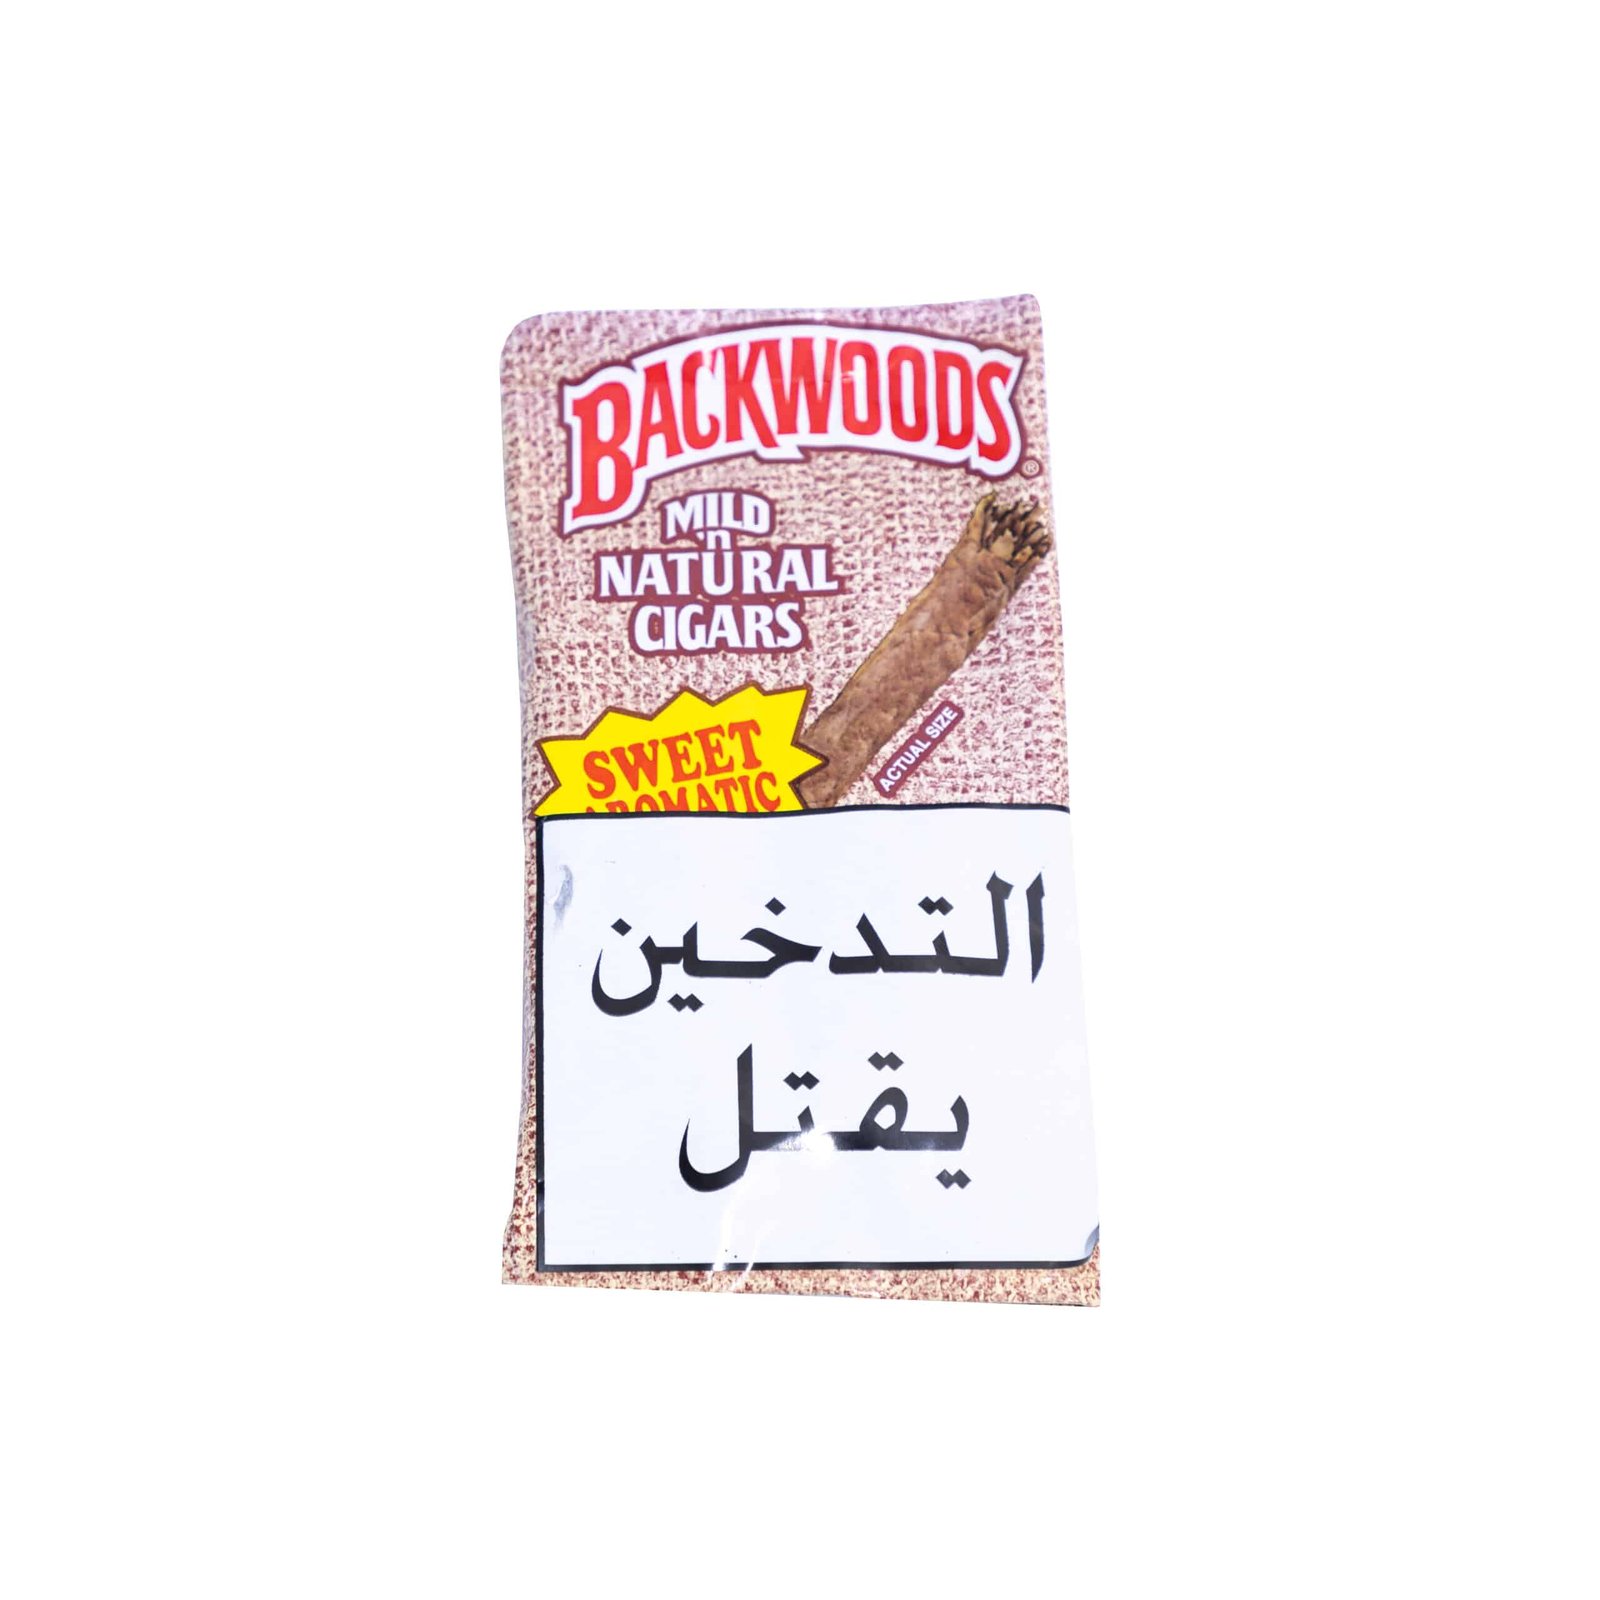 cigarellobackwoodsaromatic